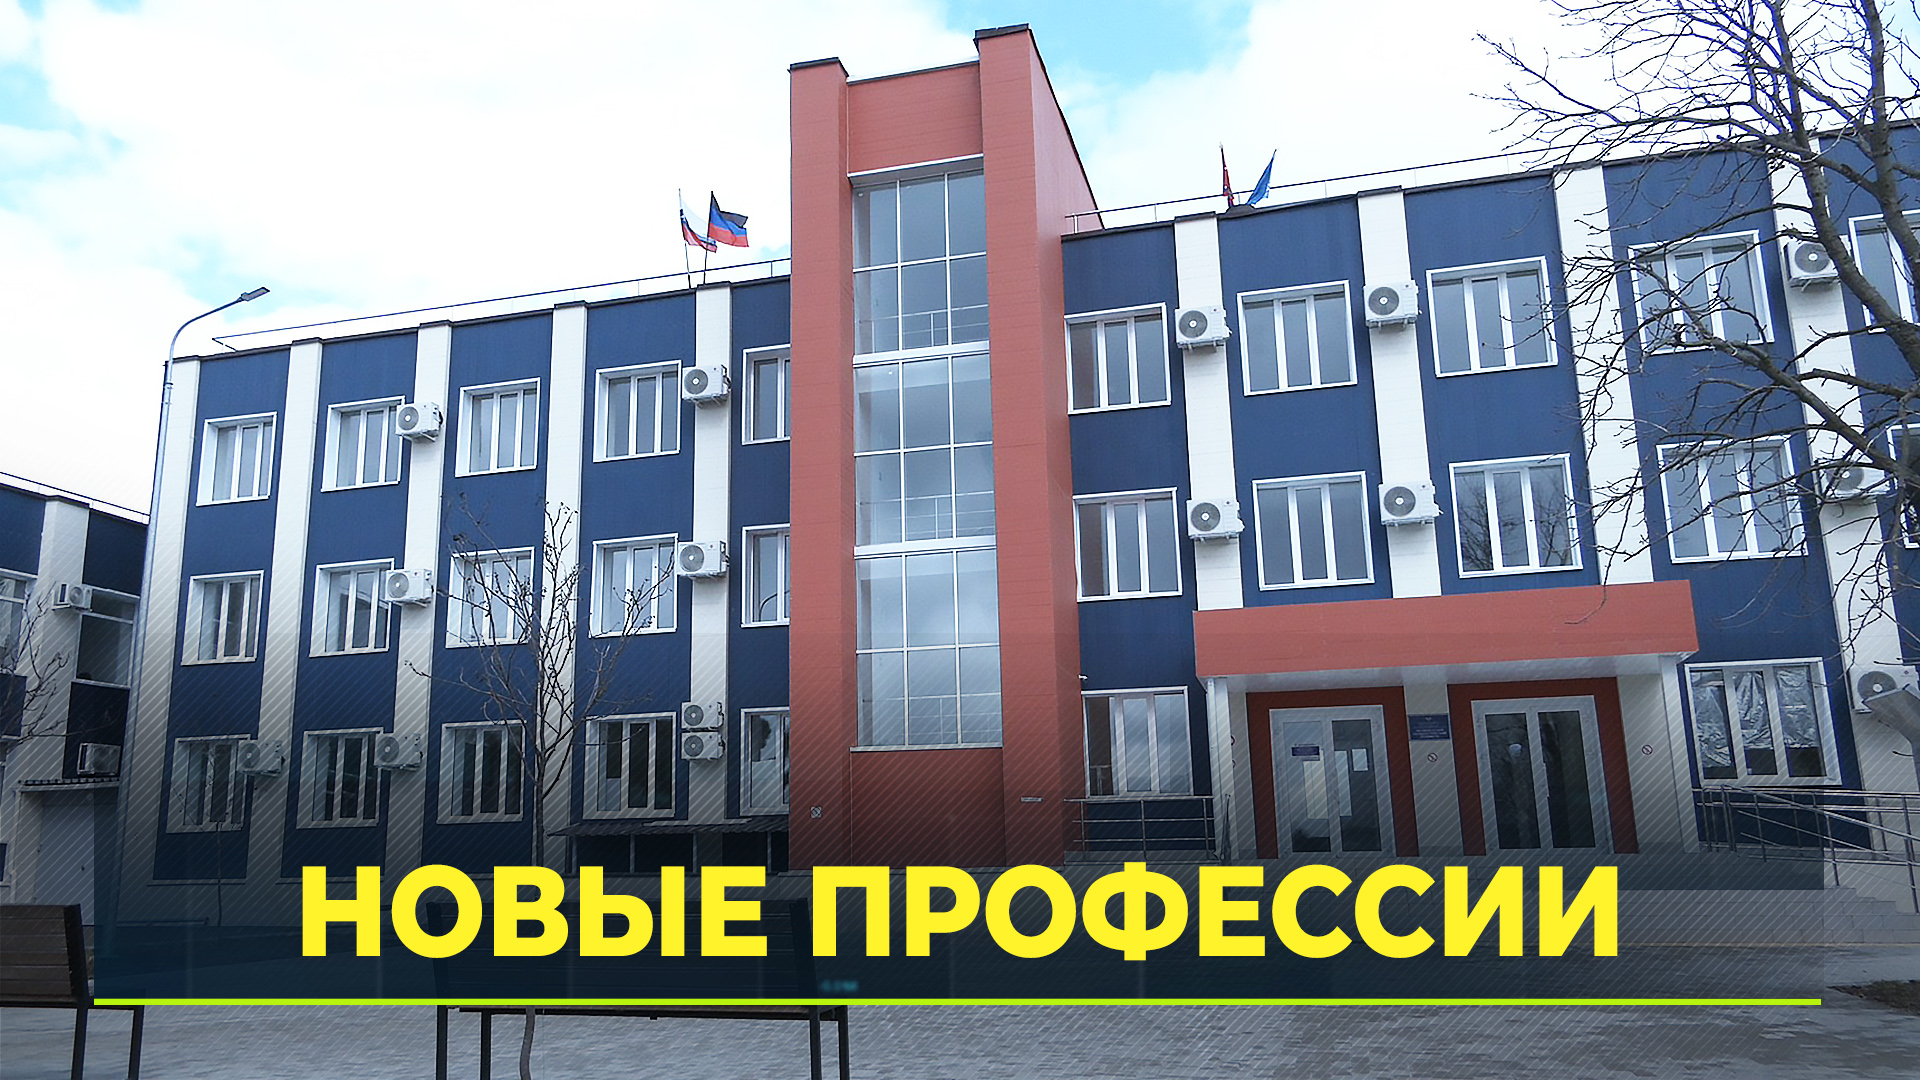 Ямальские строители восстановили здание технологического техникума в Волновахе